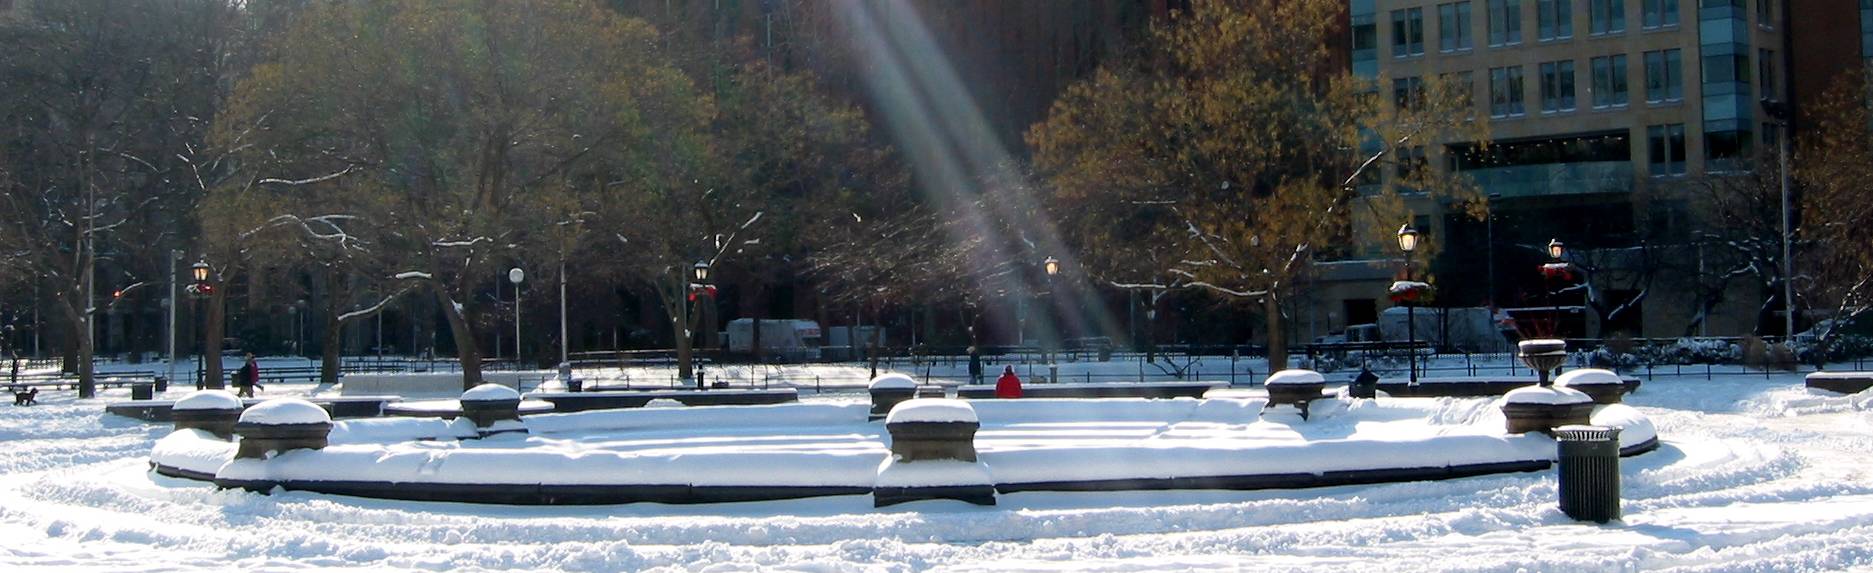 Park Fountain Sun Spotlight